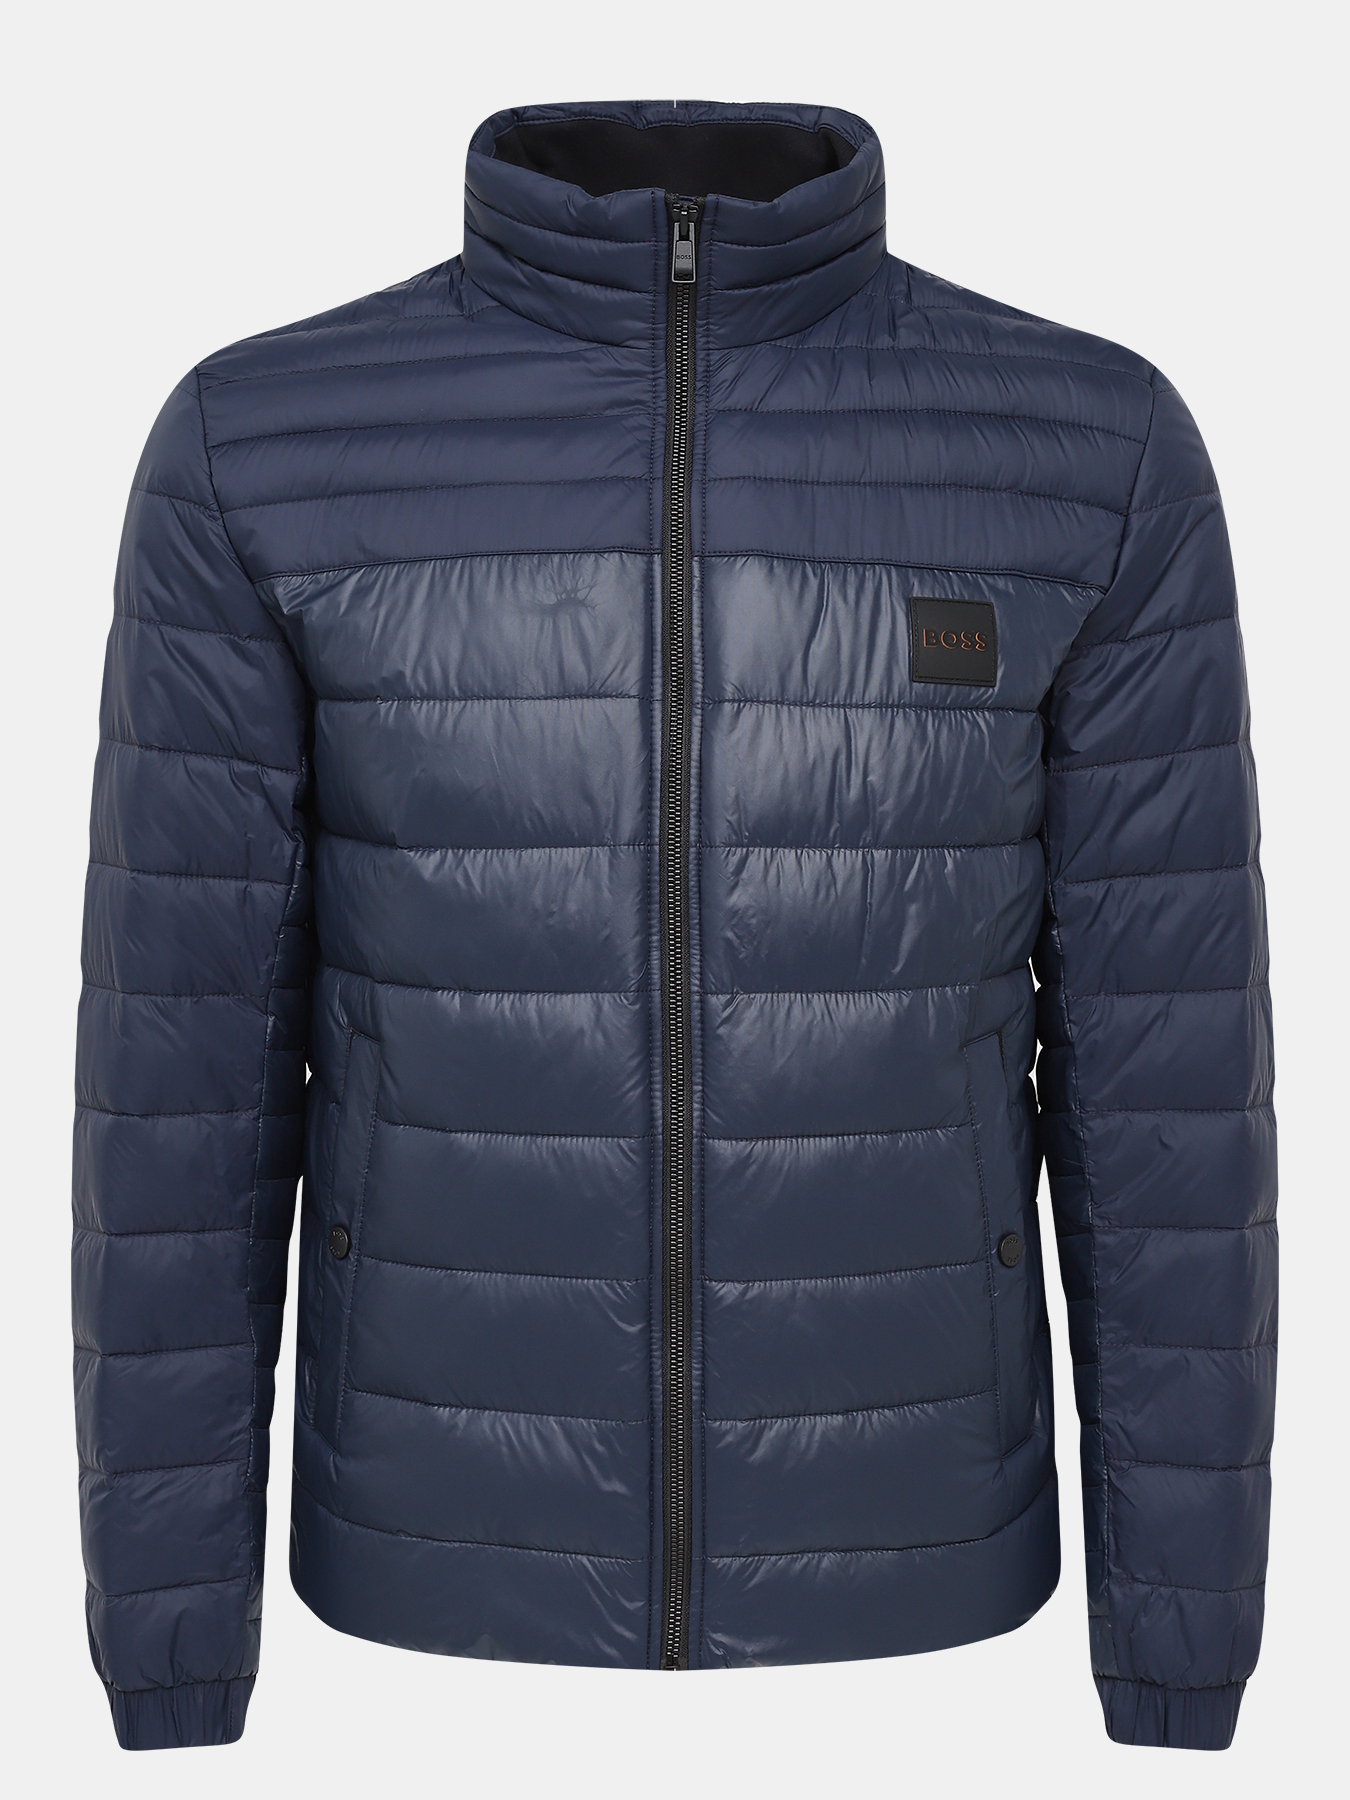 Куртка Oden BOSS 434079-026, цвет темно-синий, размер 50 - фото 1